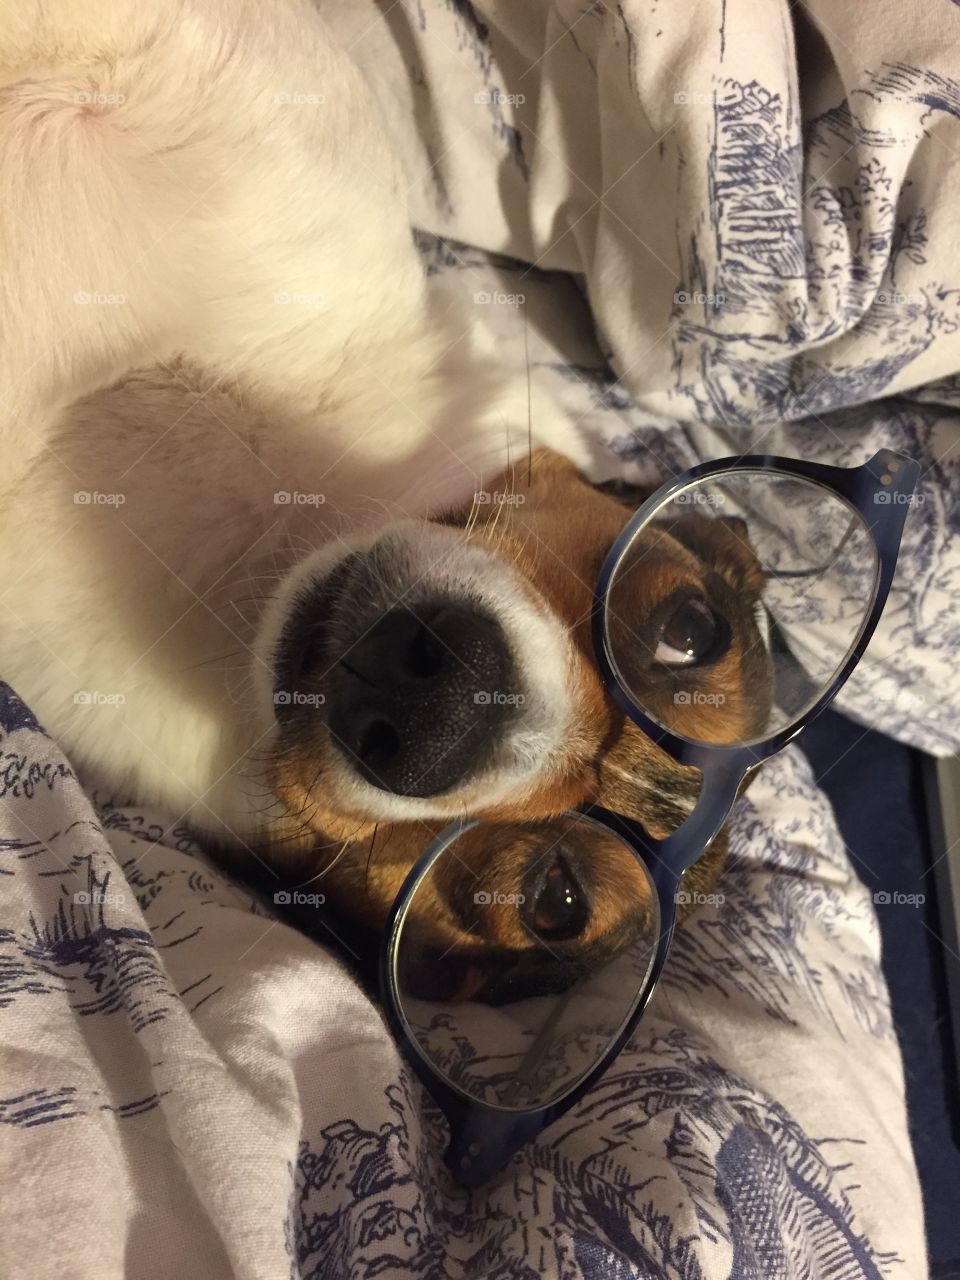 A cute dog wearing eyeglasses